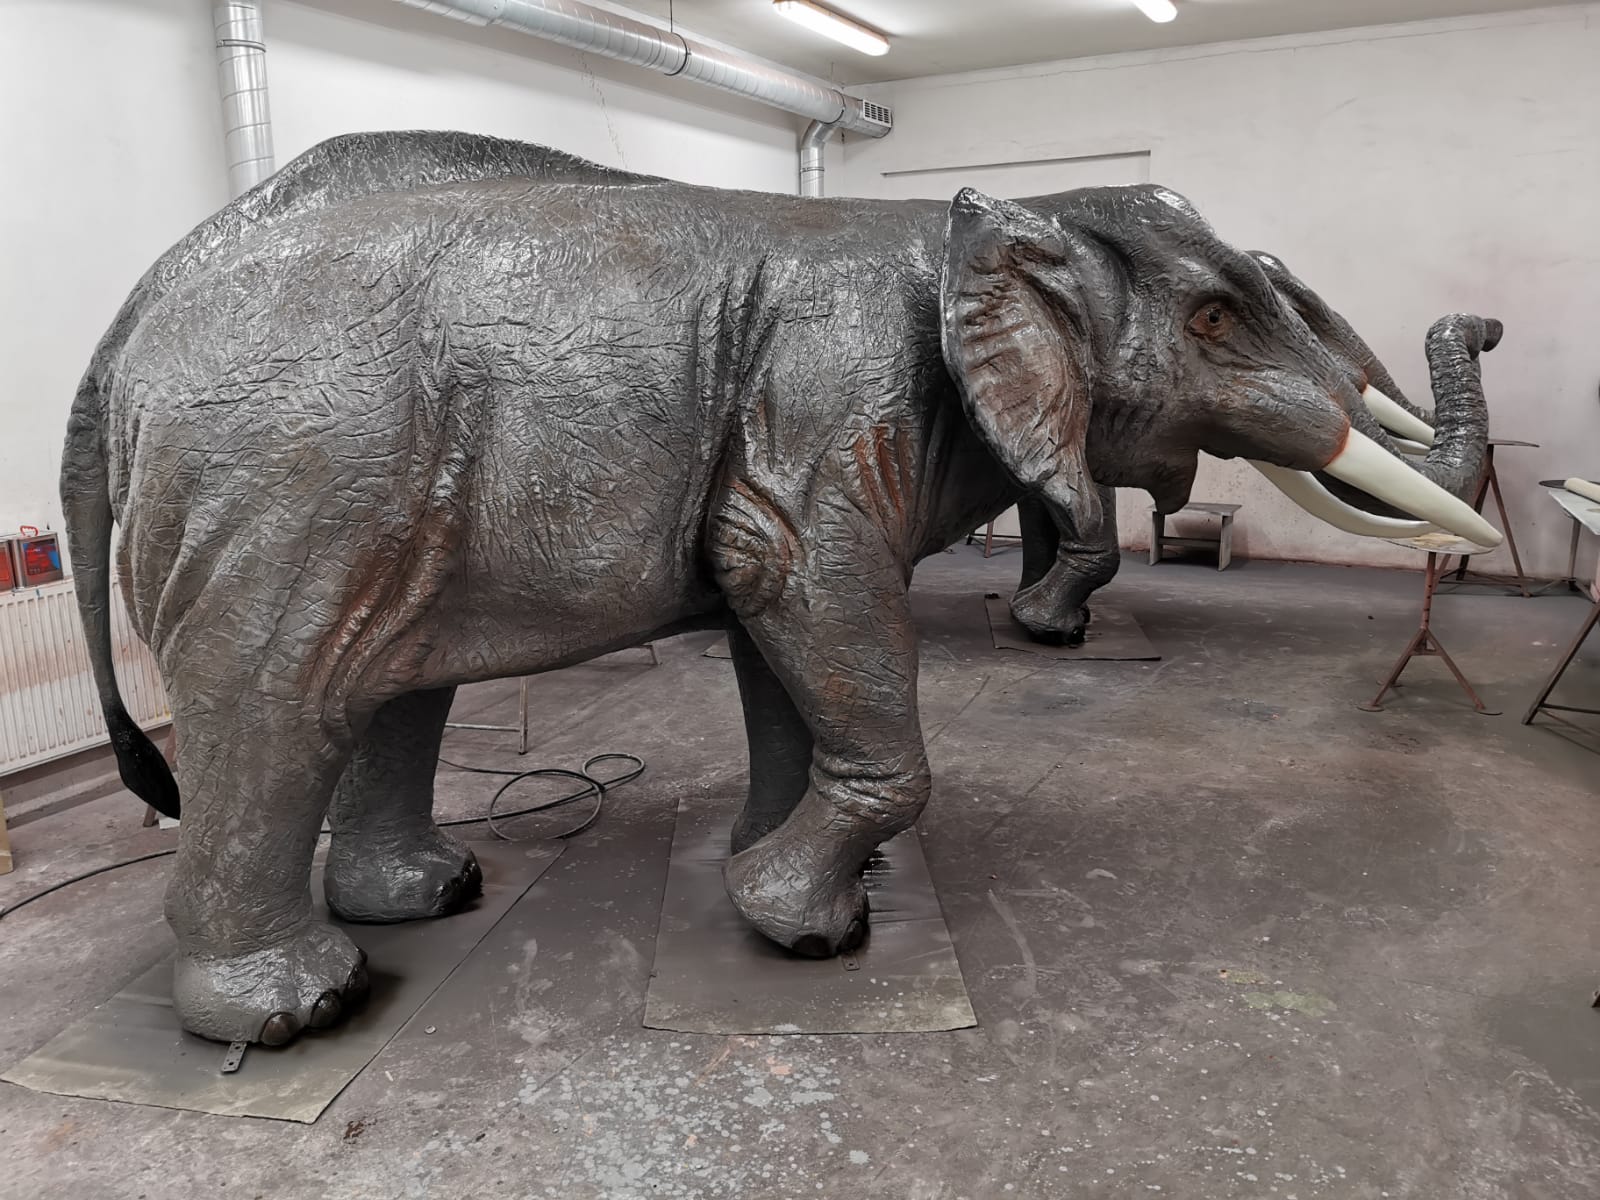 Elefant 223 x 410 x 155cm ca.